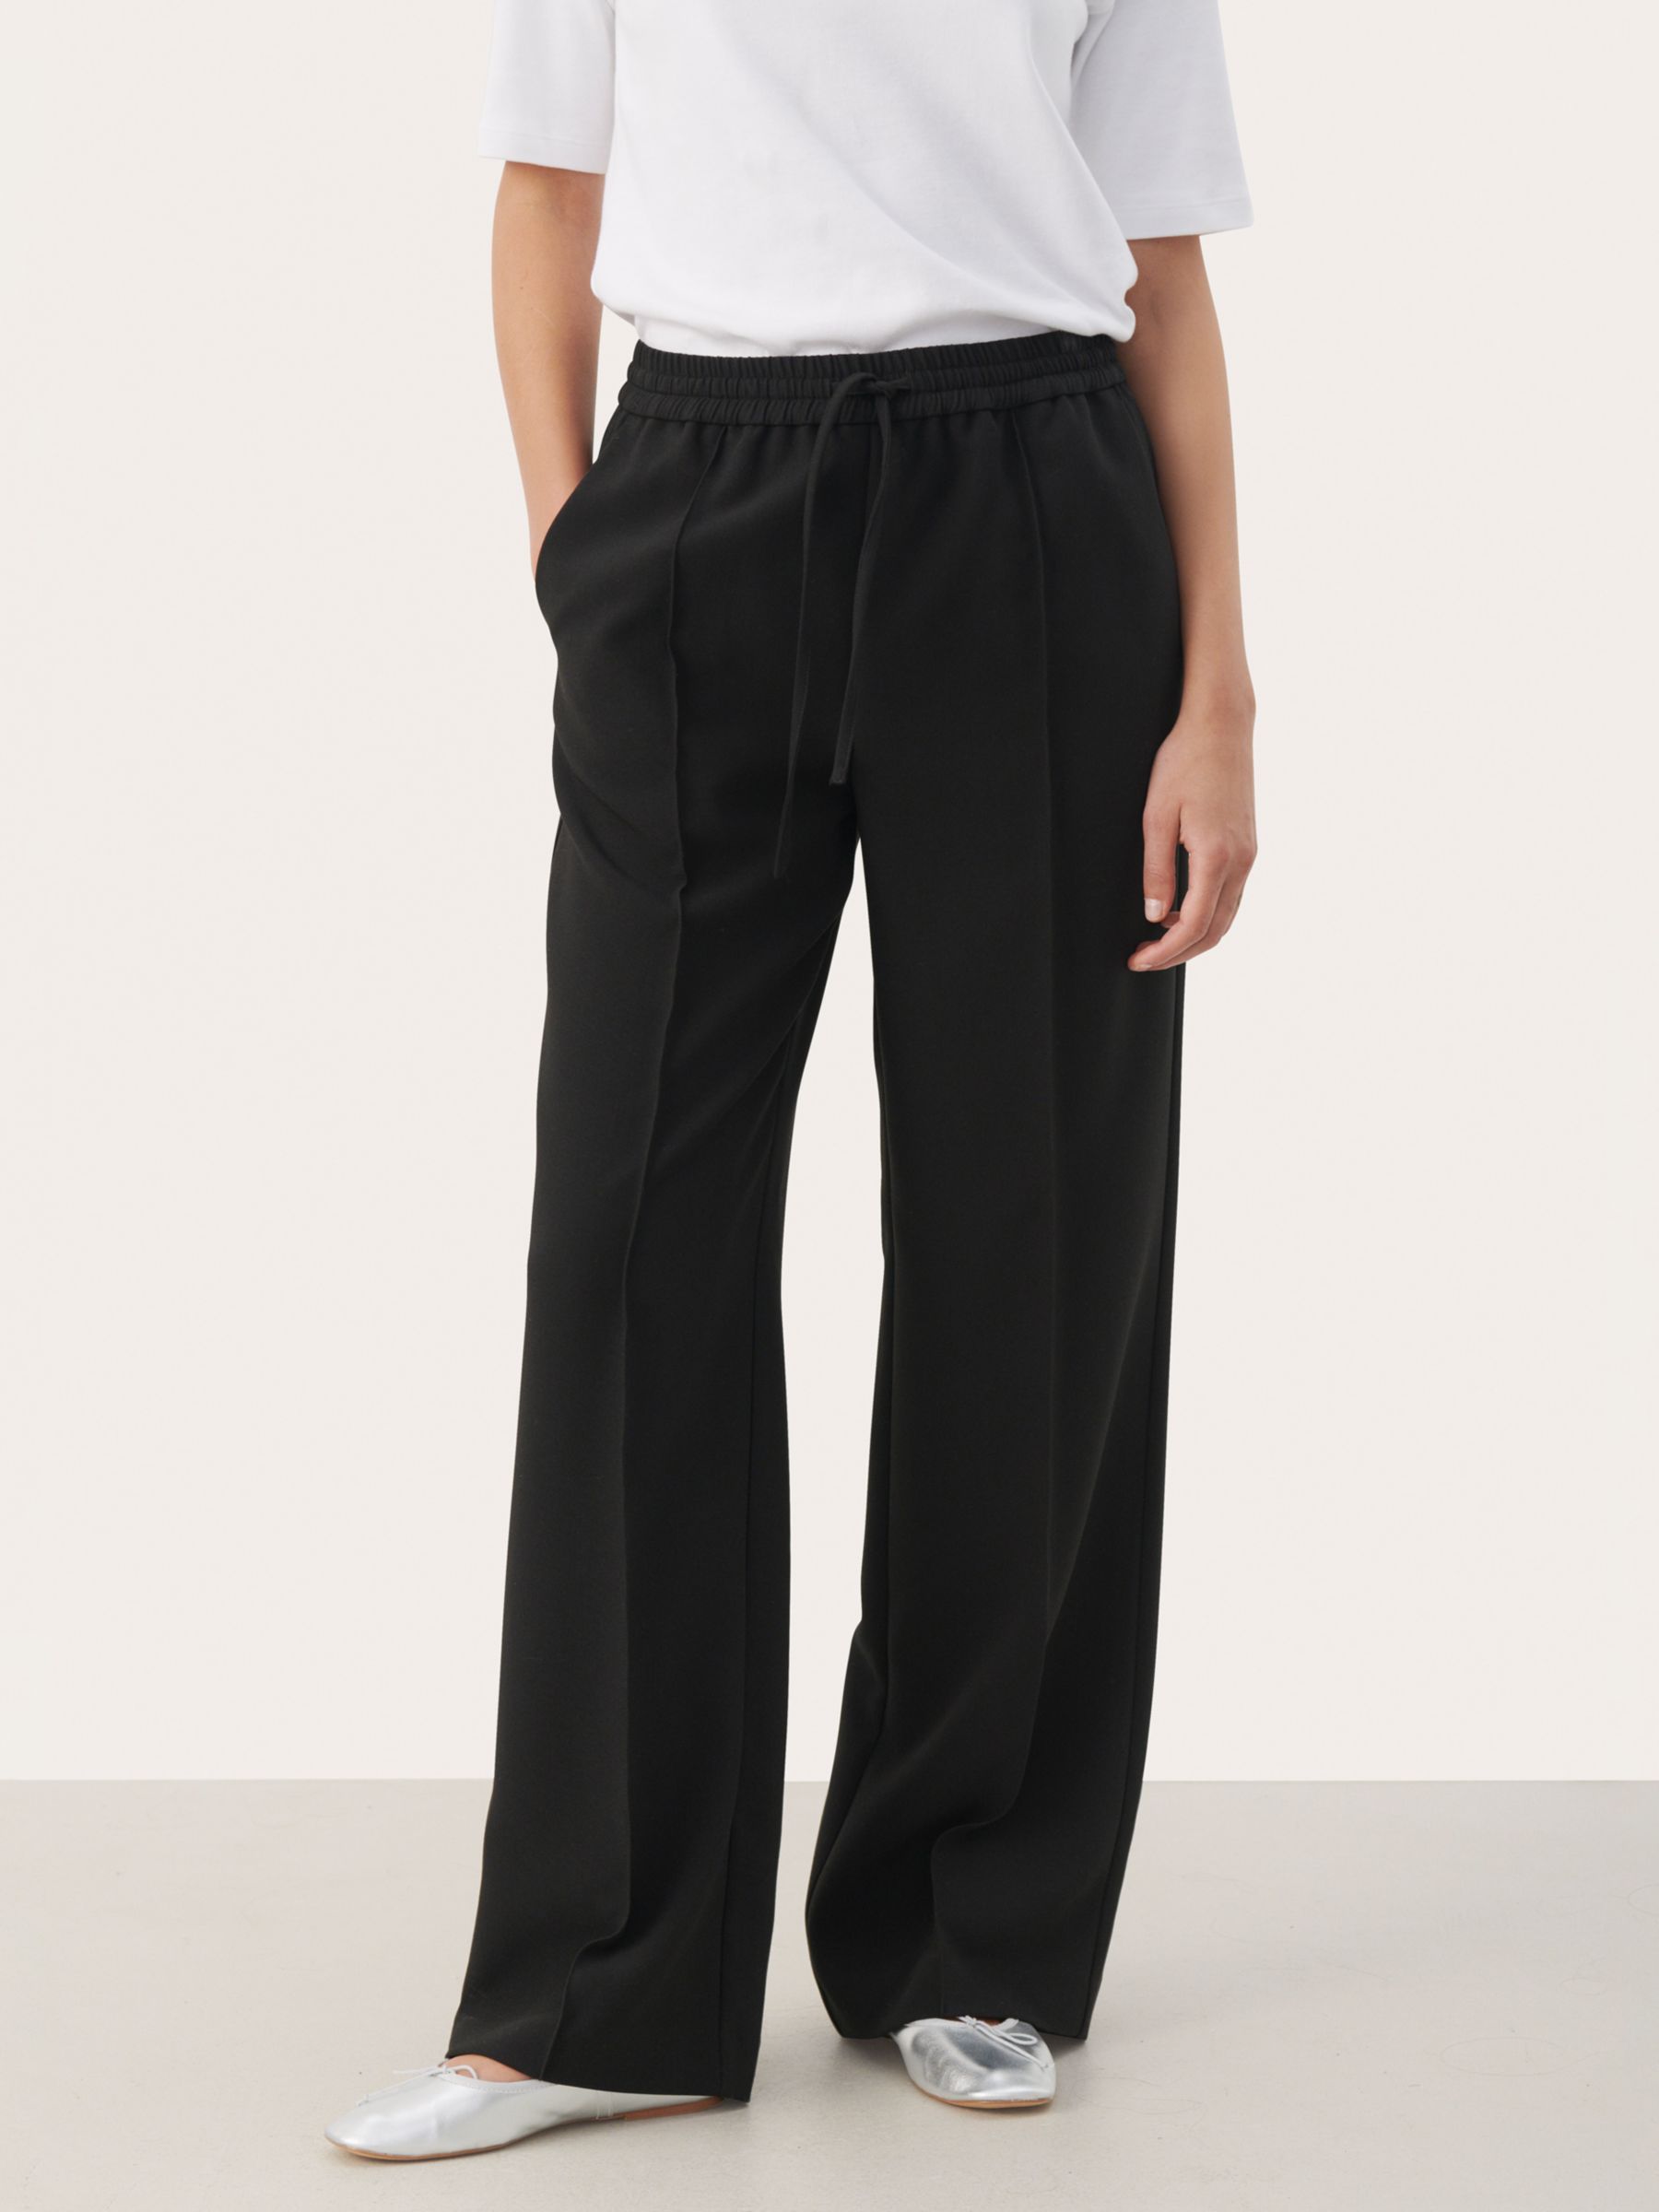 Buy Women's Black Elasticated Trousers Online